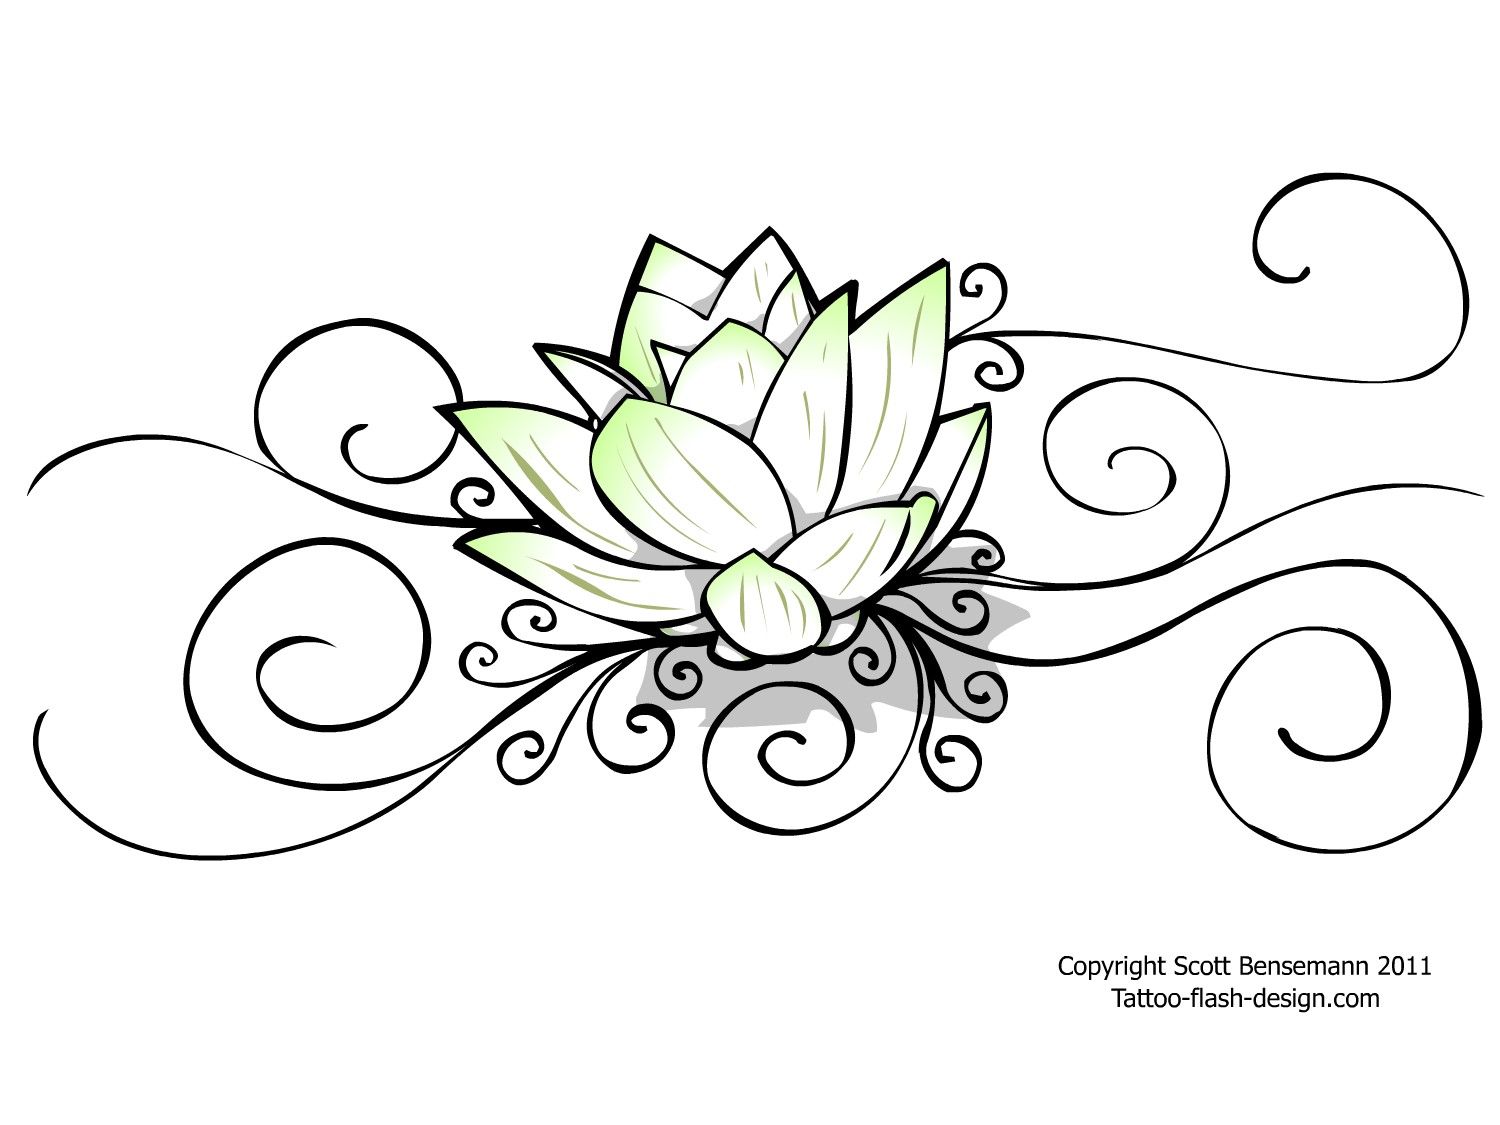 Tattoo Flower Lotus Design for women - Female Tattoo Designs